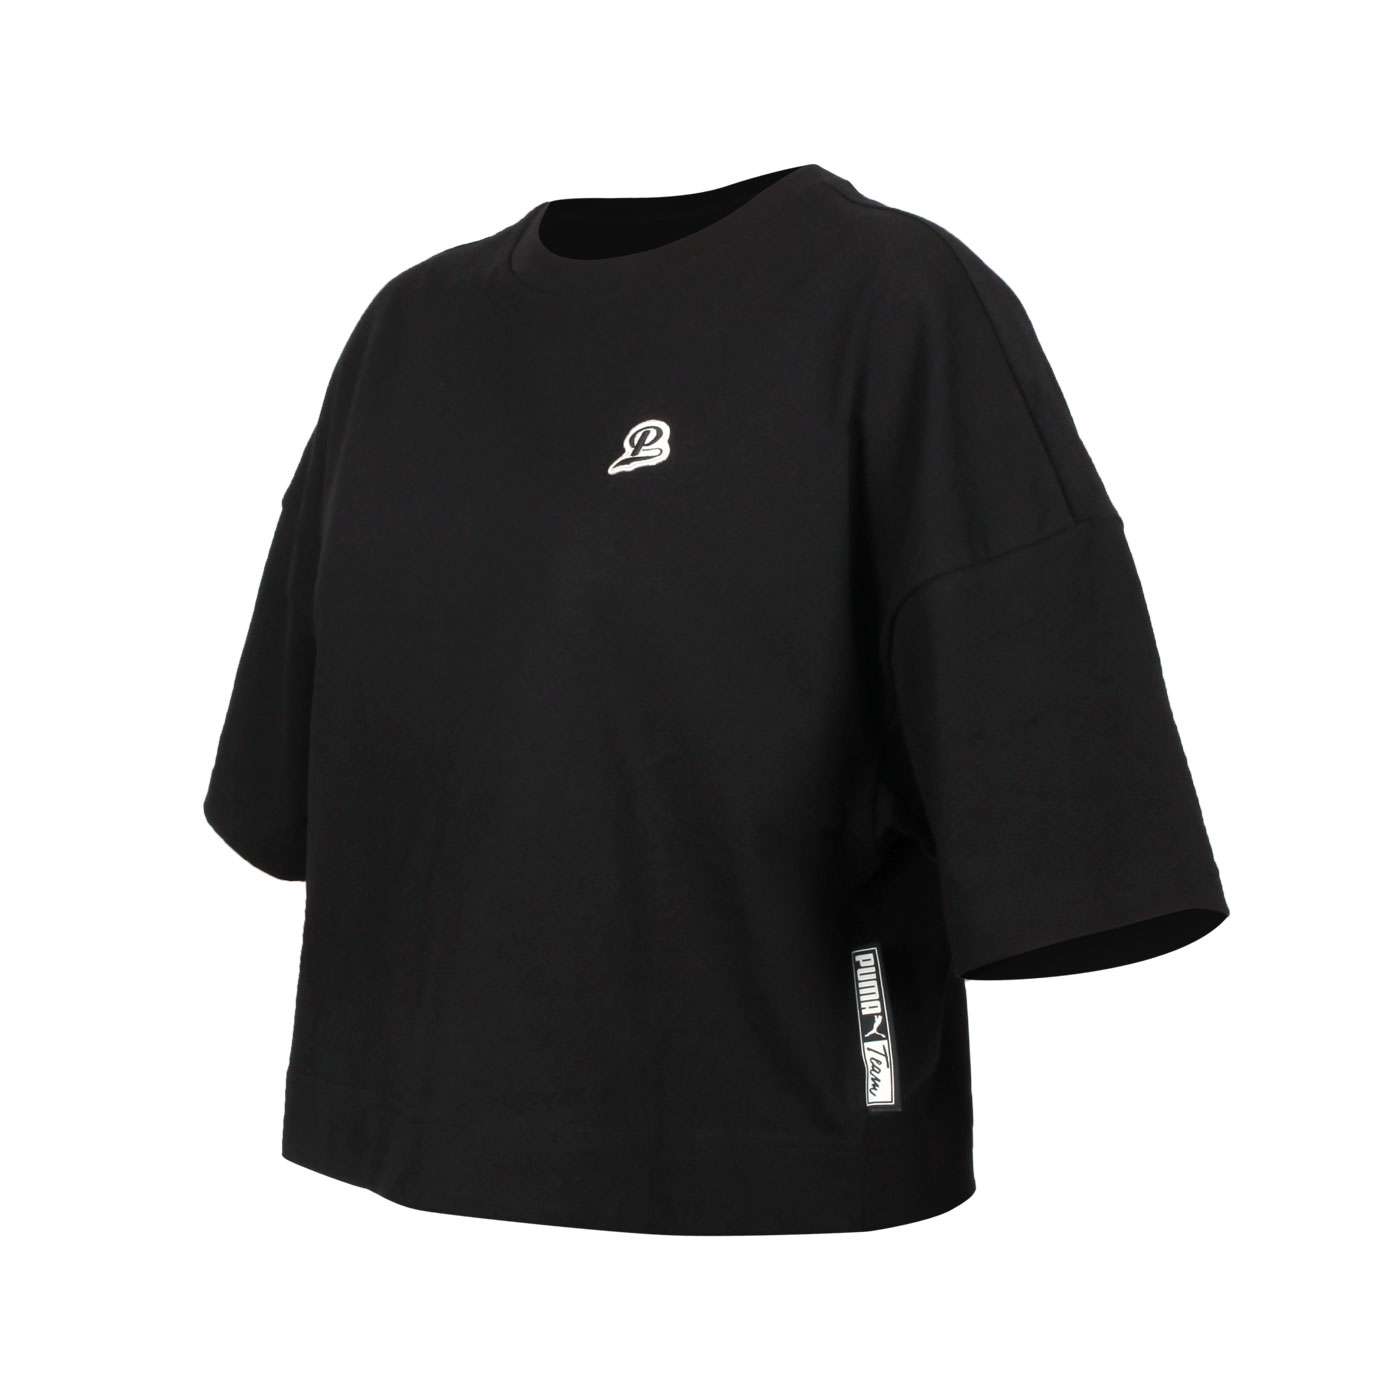 PUMA 女款流行系列Team 短袖T恤 53682301 - 黑白